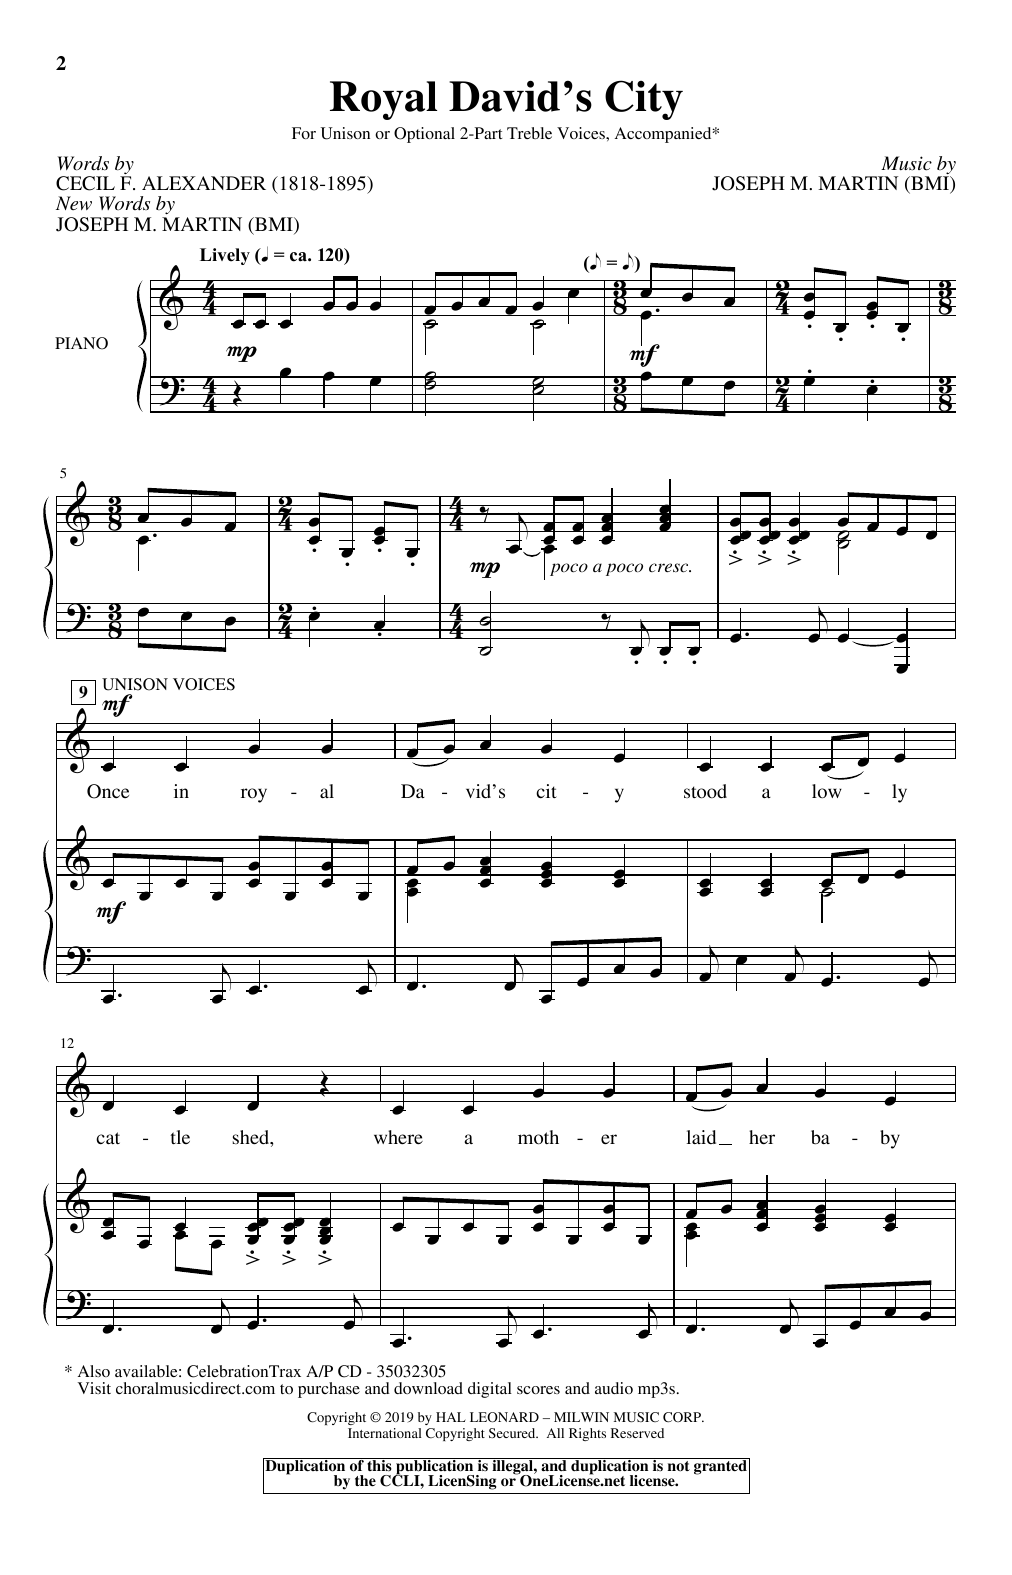 Joseph M. Martin Royal David's City Sheet Music Notes & Chords for Choral - Download or Print PDF